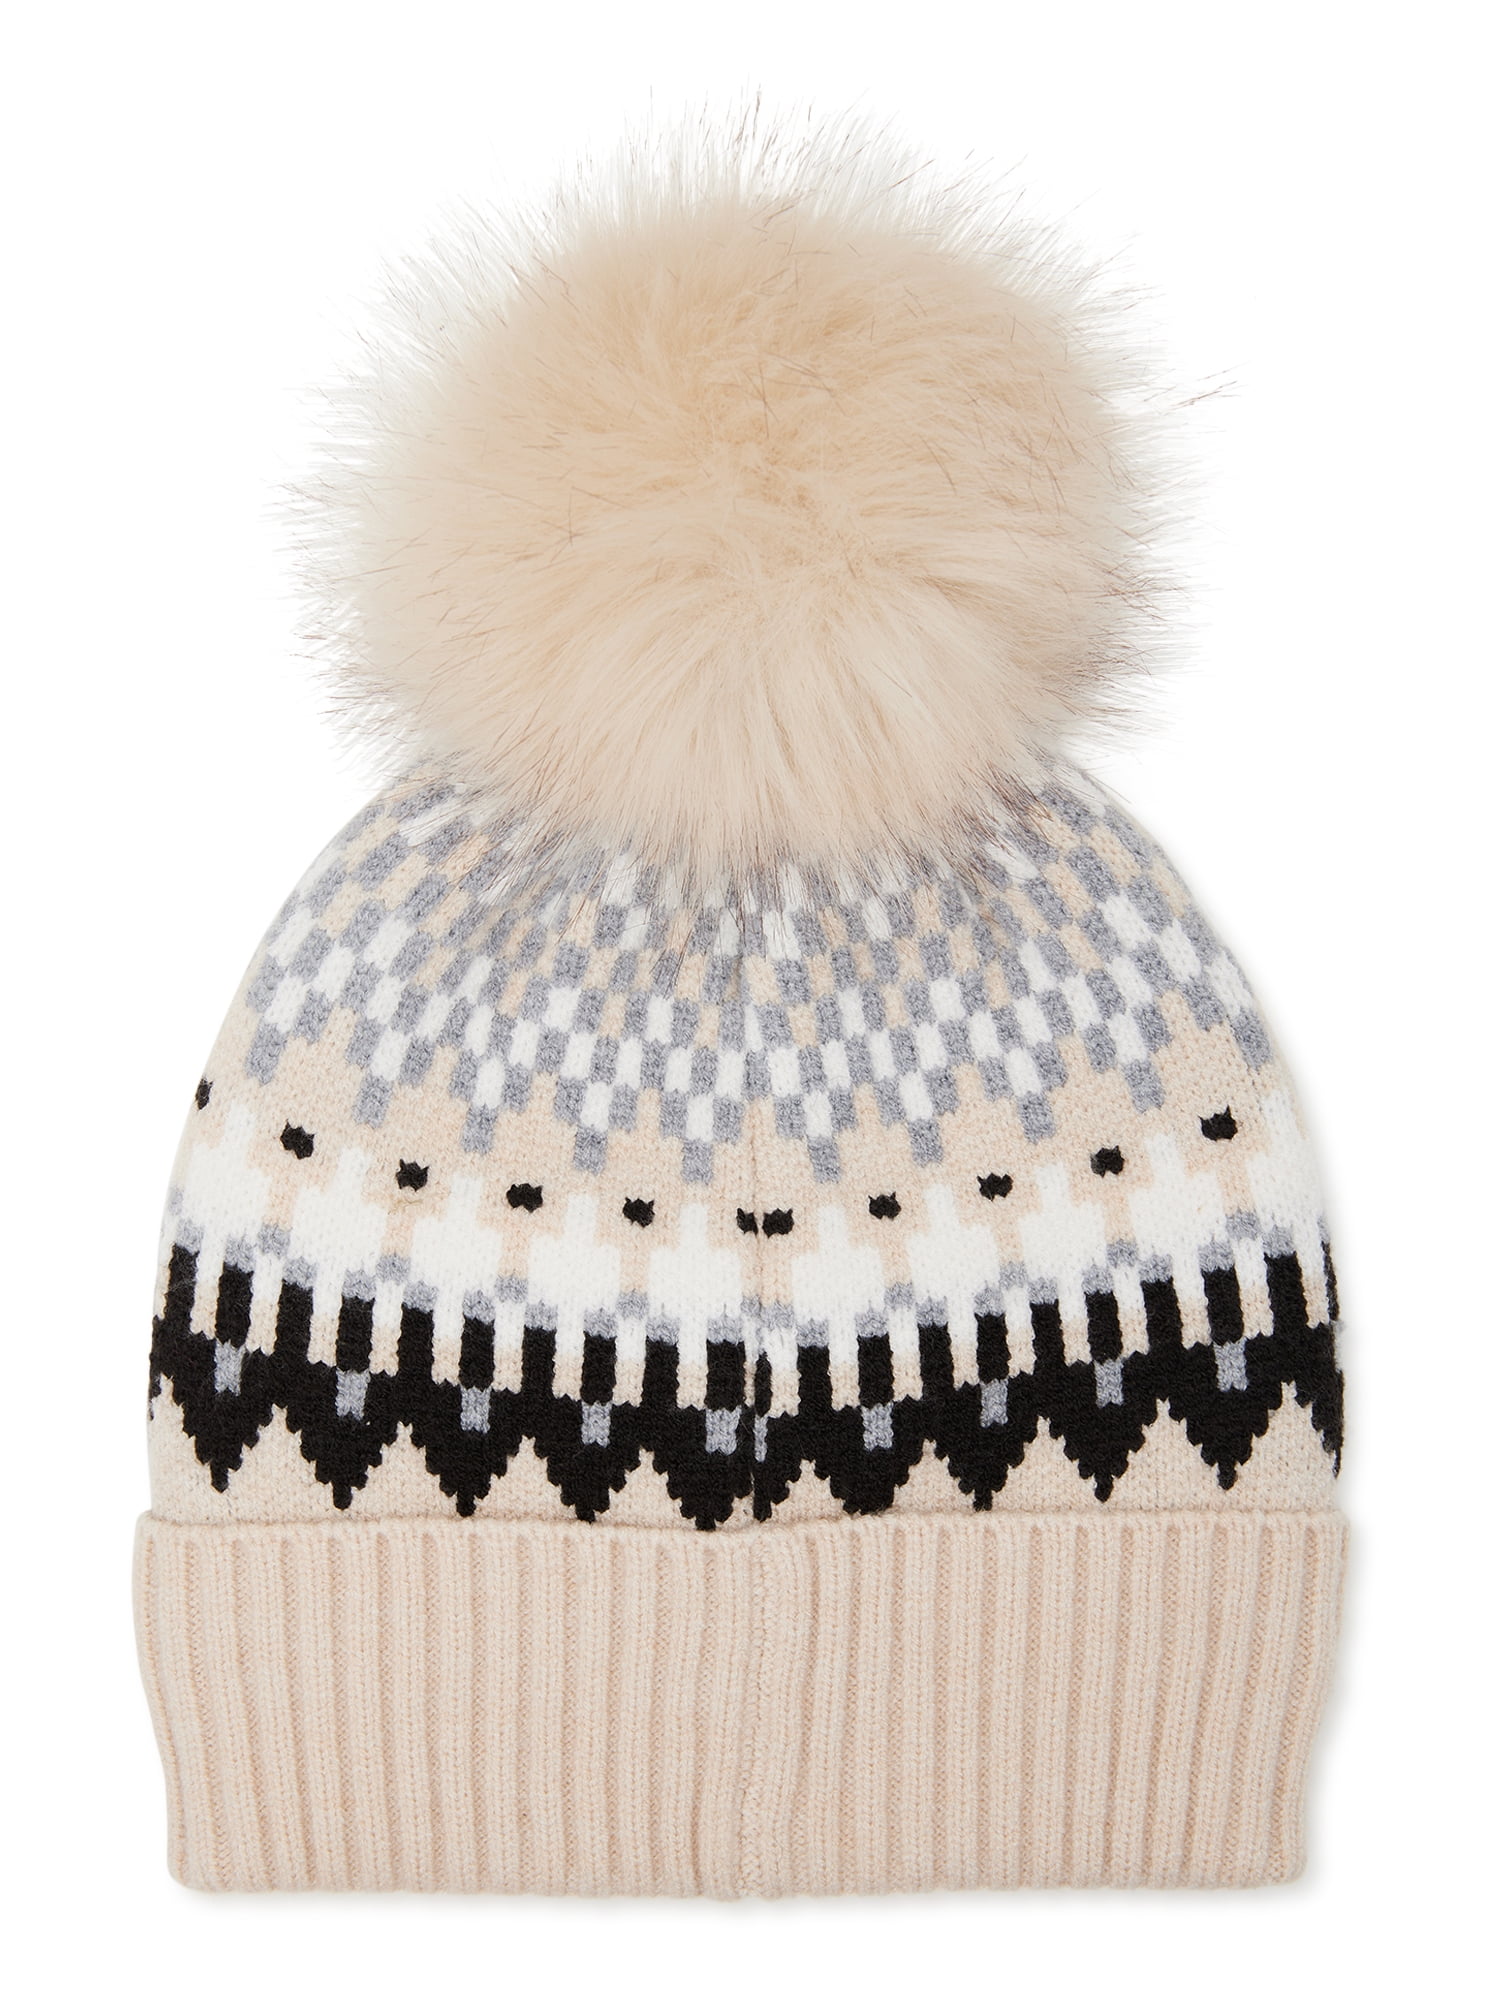 Genuine Fur Pom Pom for Hats — The Doily Lady